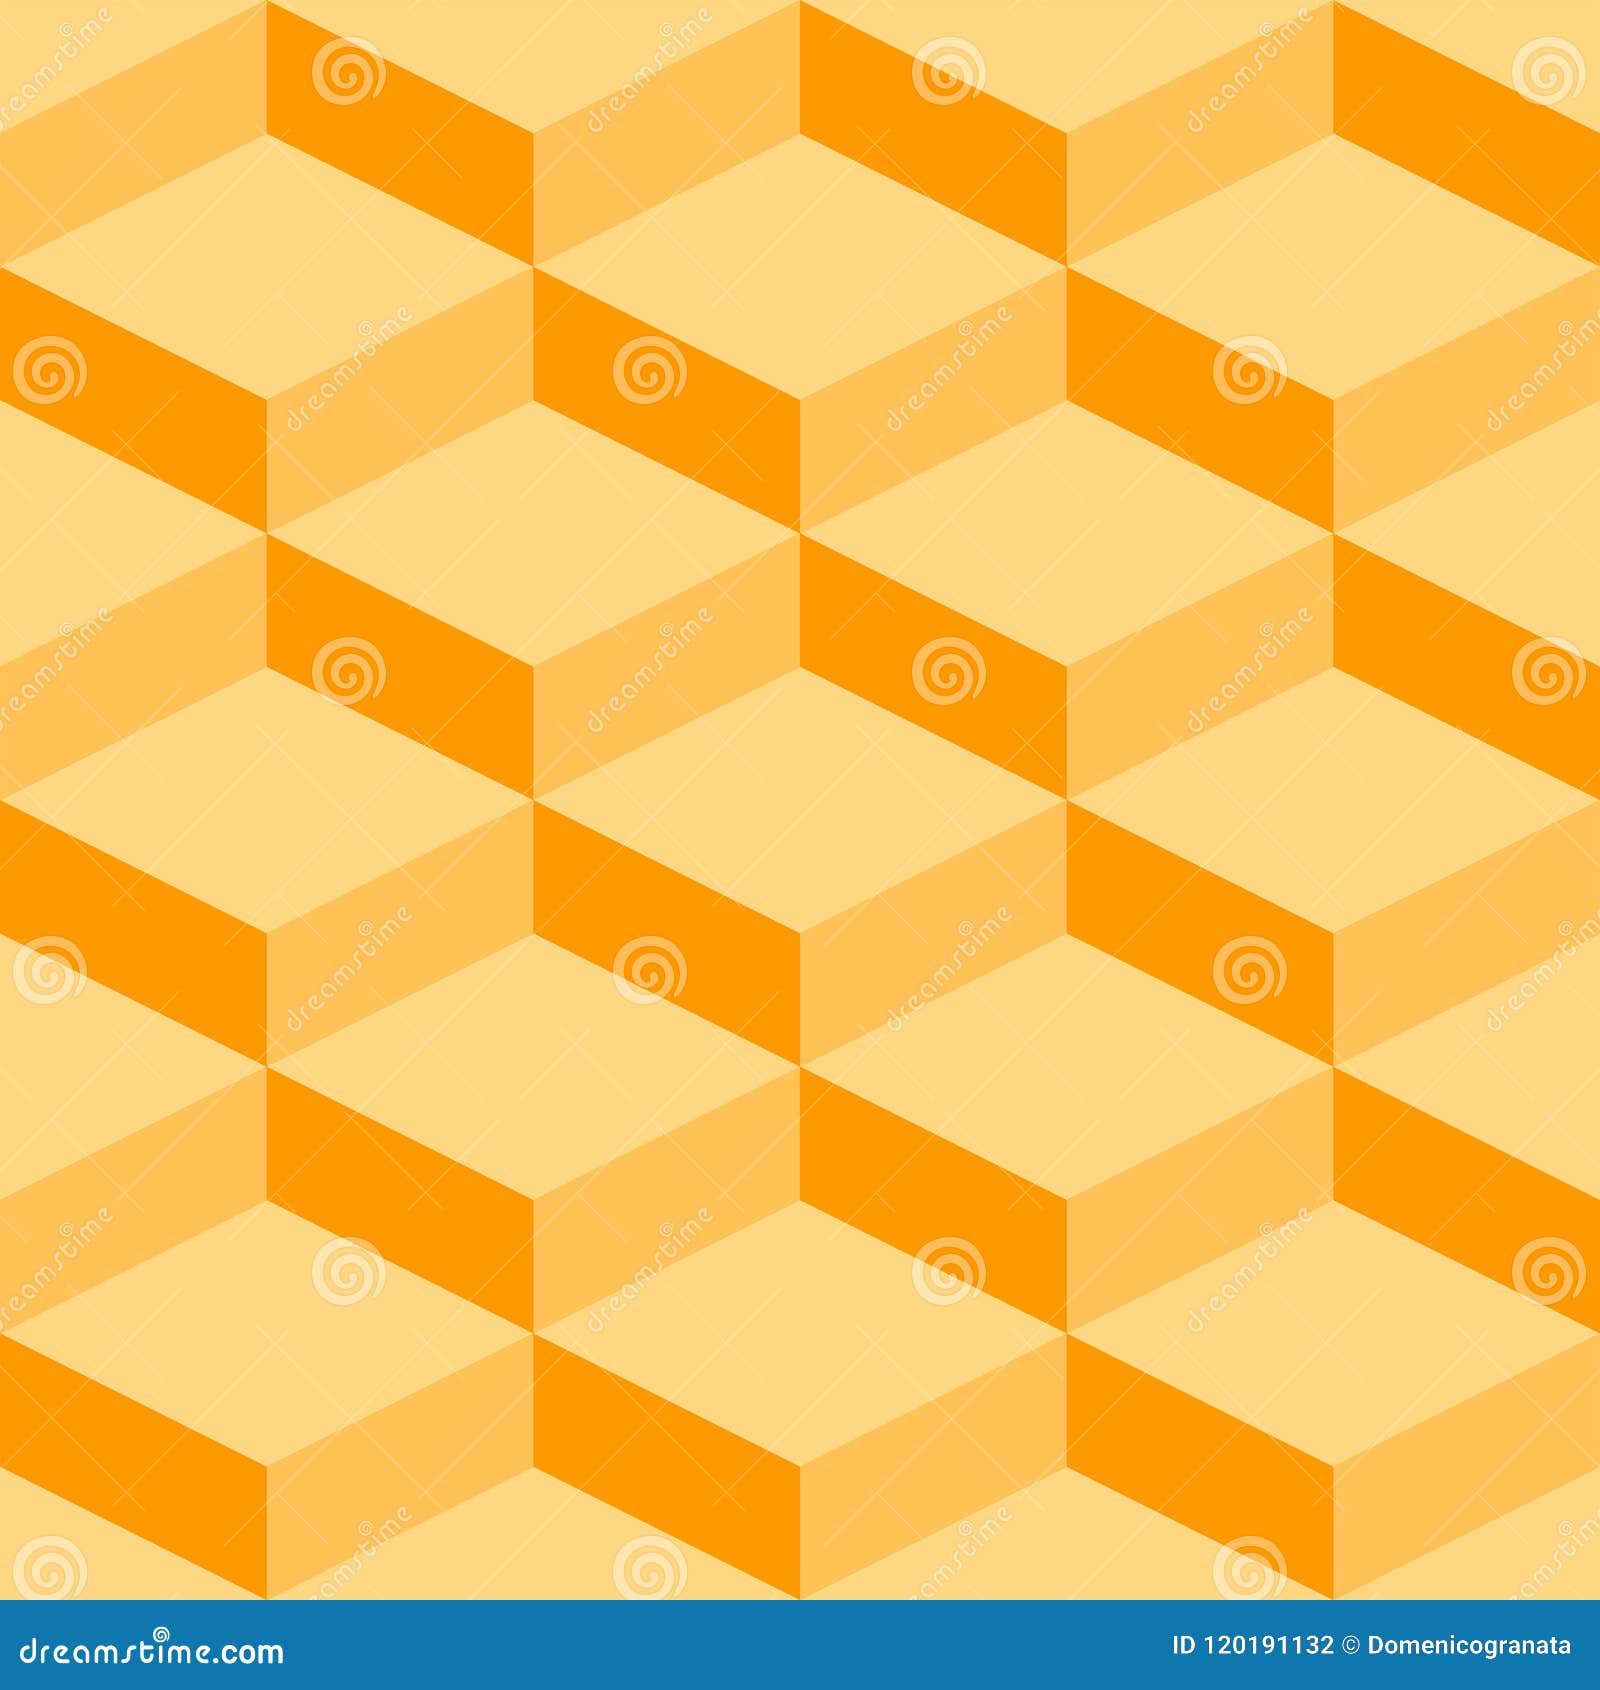 geometric pattern with orange squares